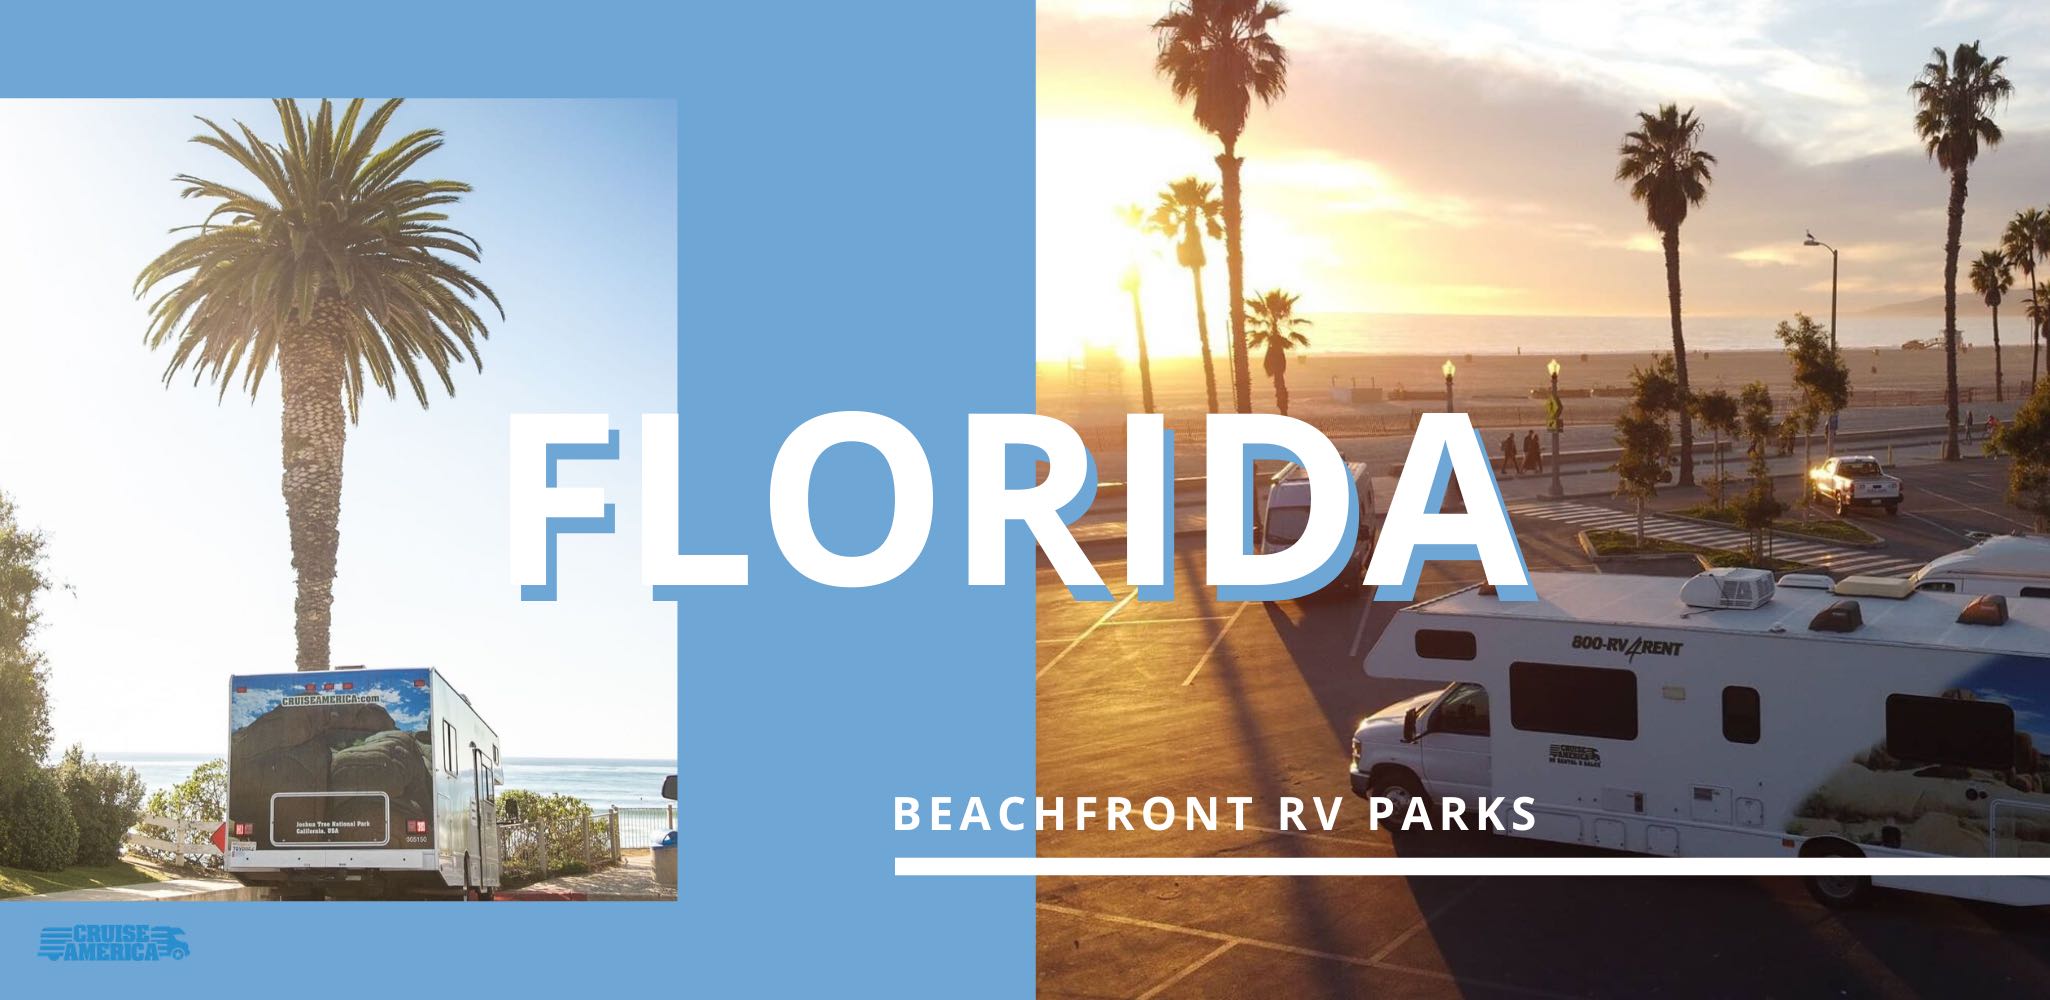 Cruise-America-Florida-beachfront-RV-parks.jpg